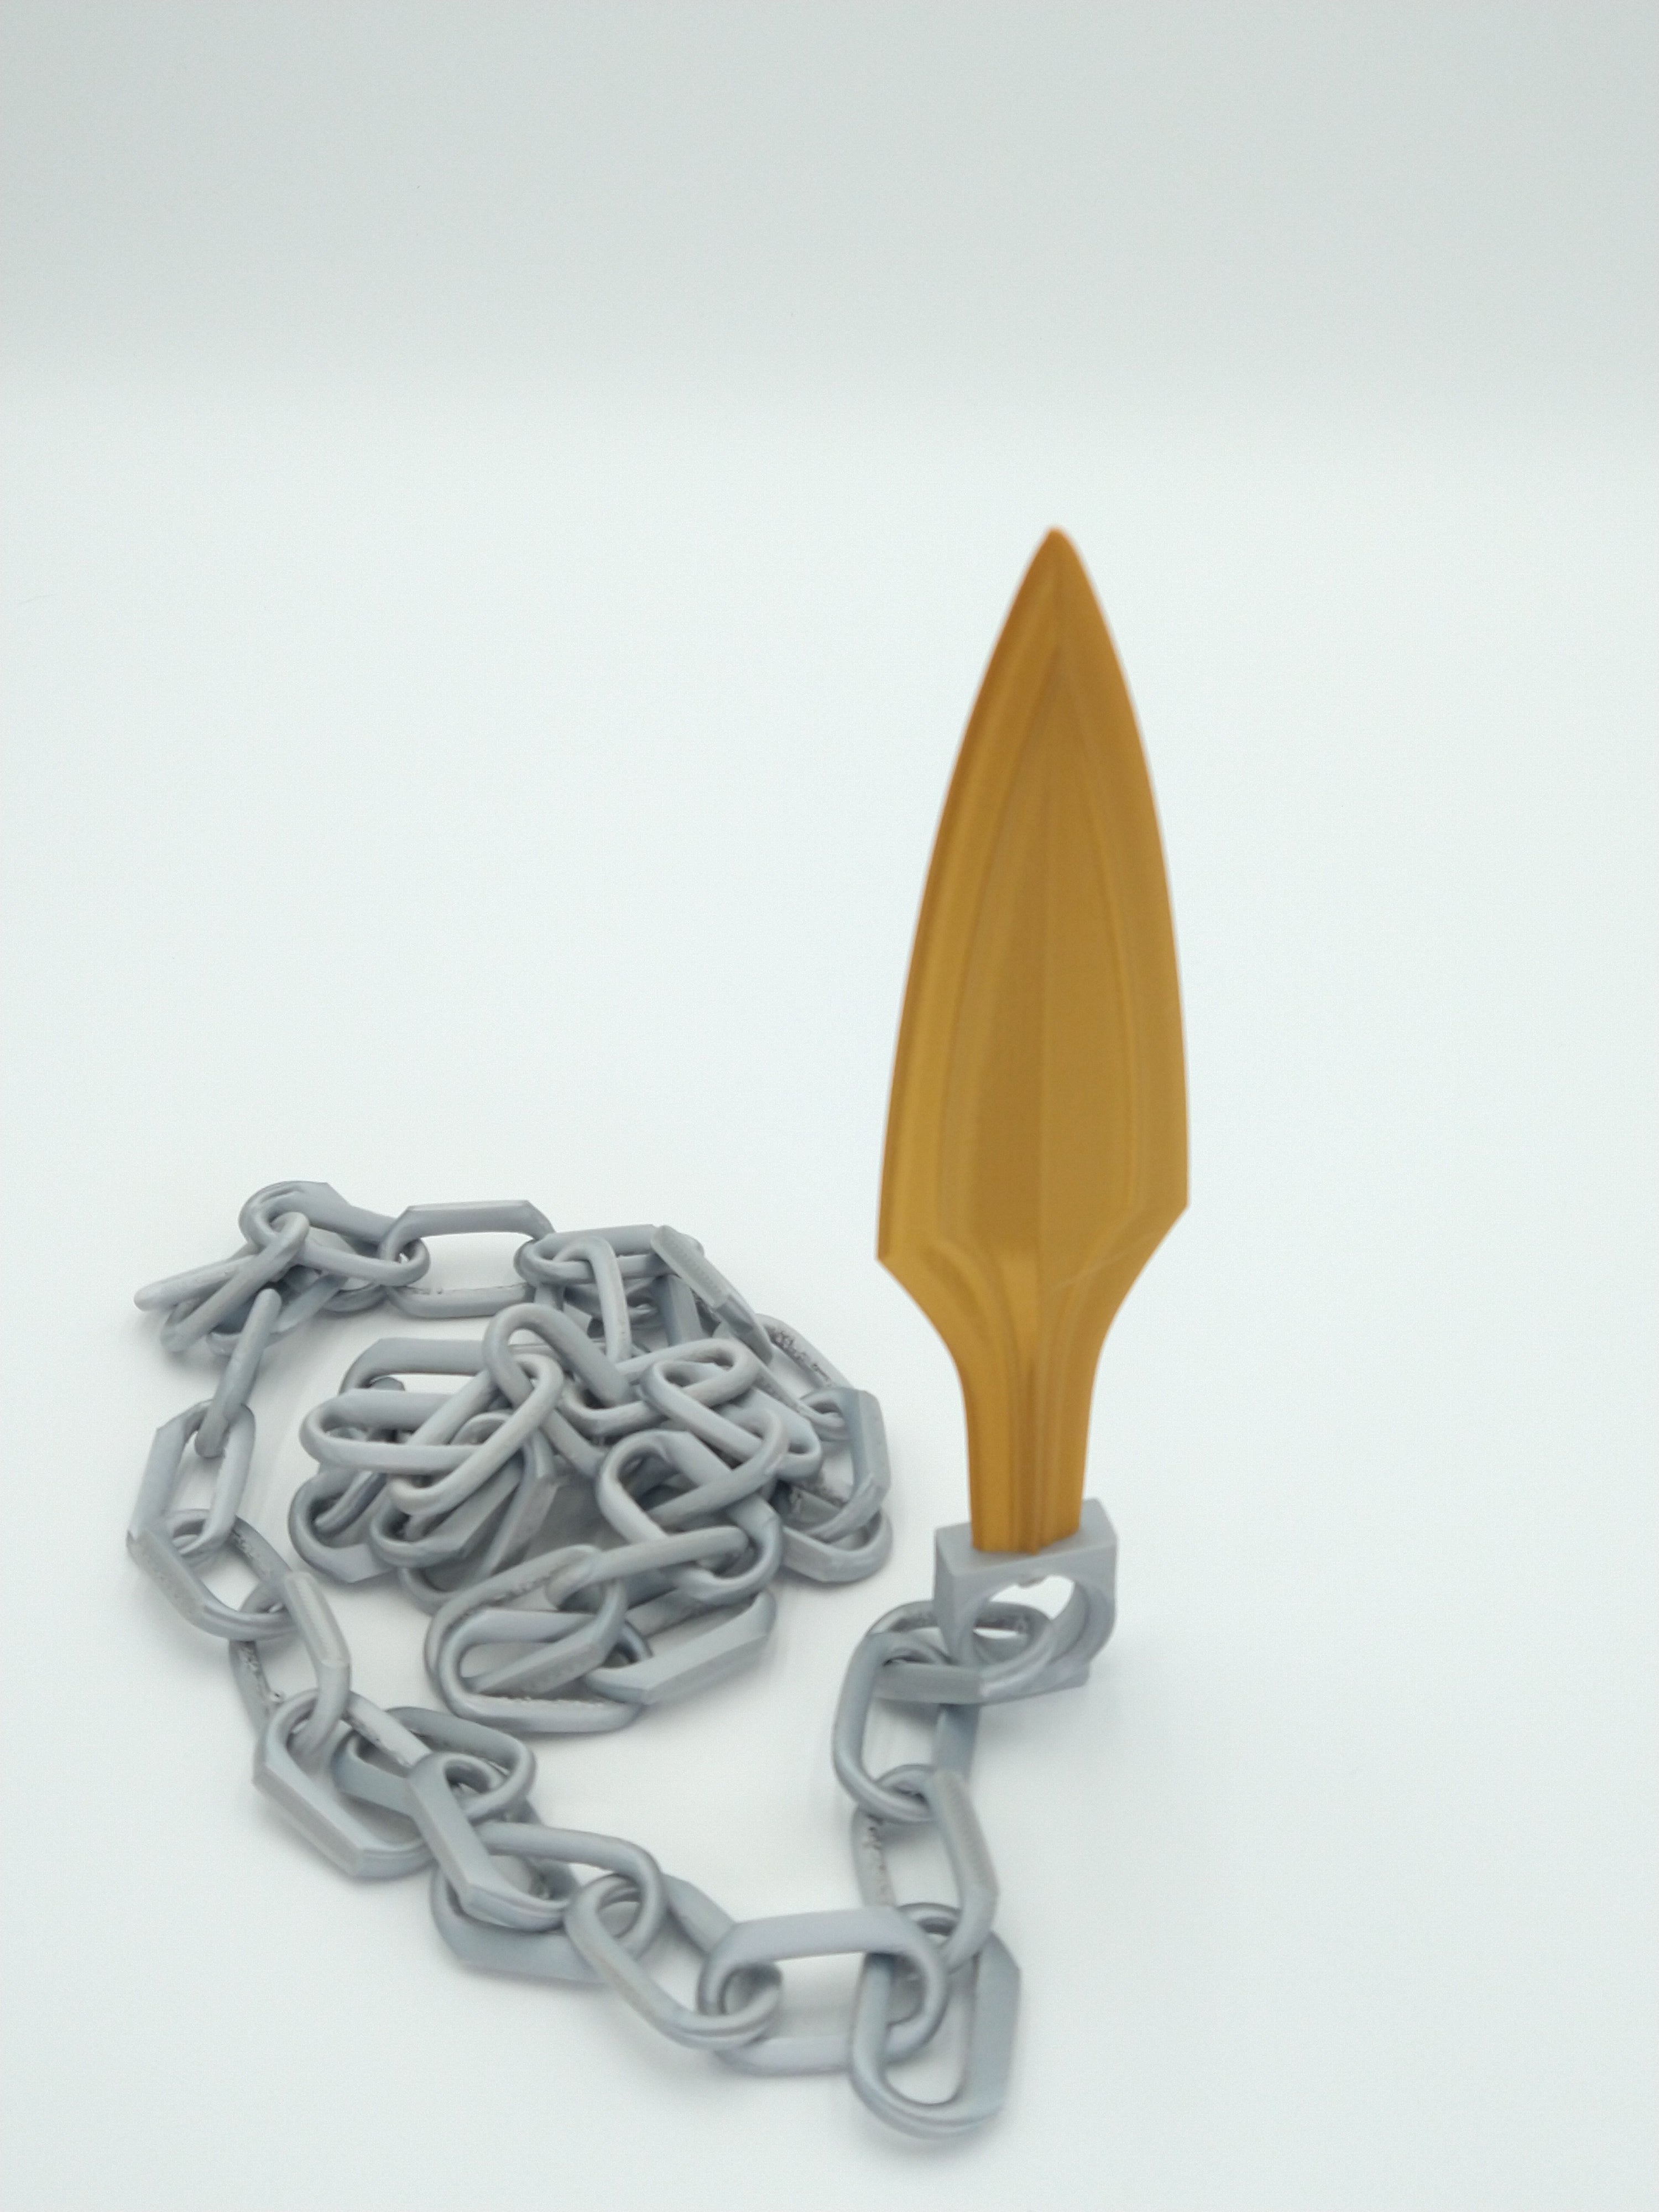 kunai knife with chain